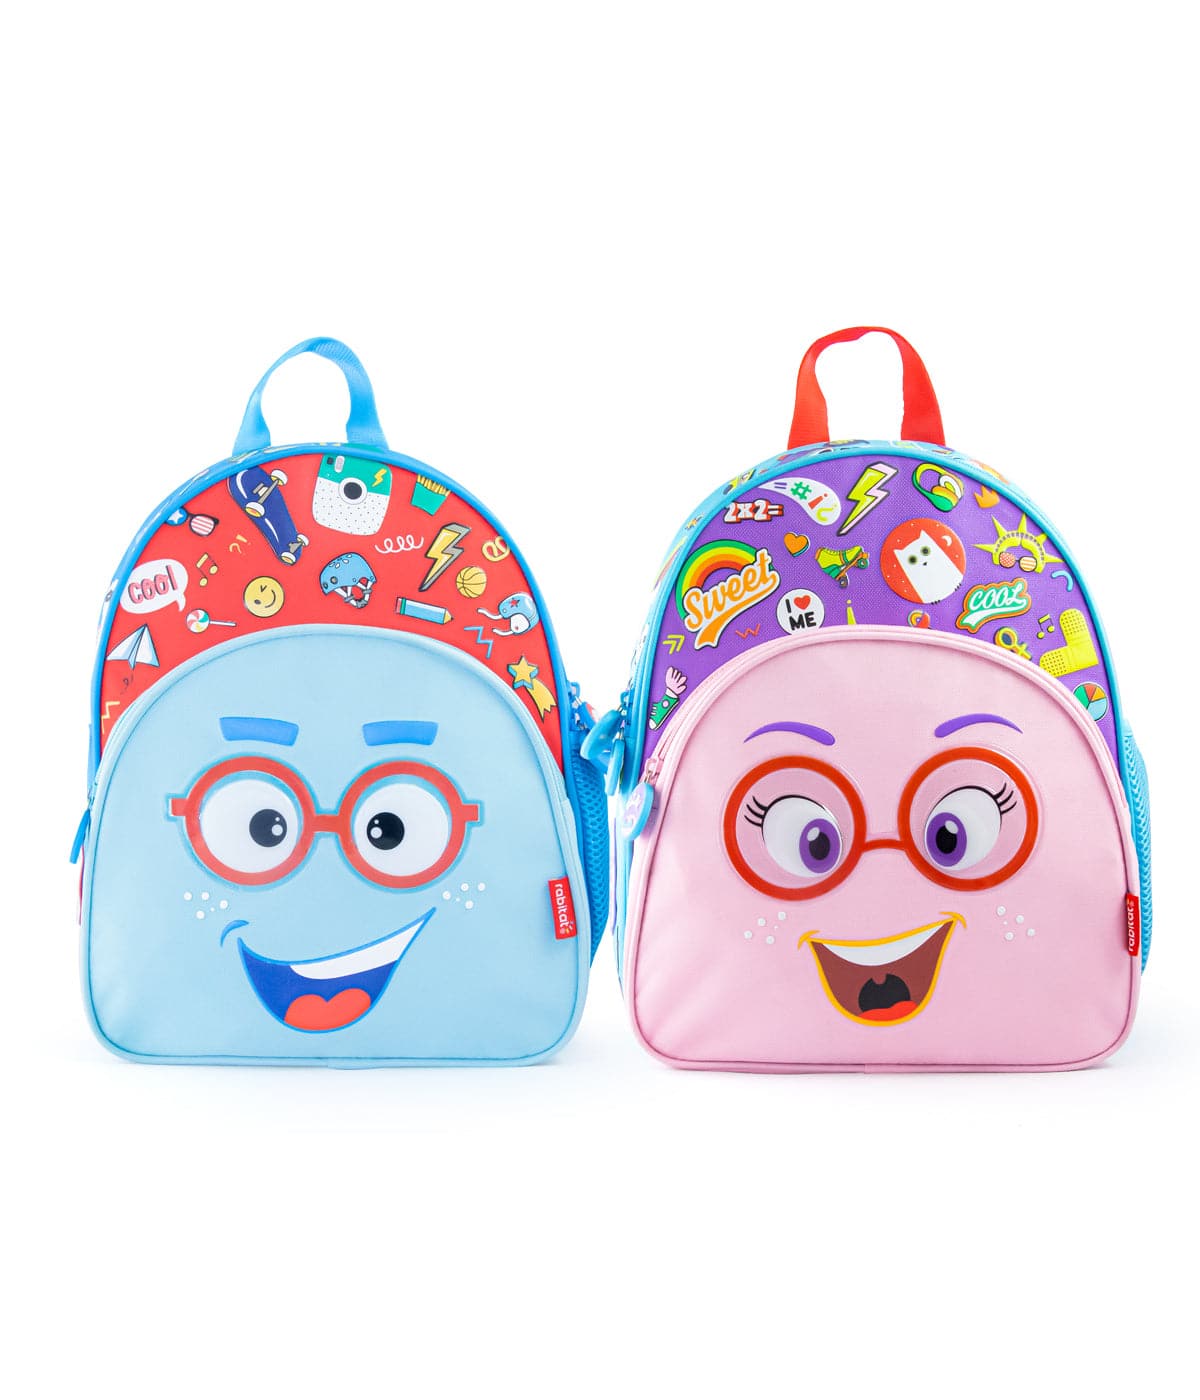 Bagful combo (Smash Kids School bag Pack of 2)